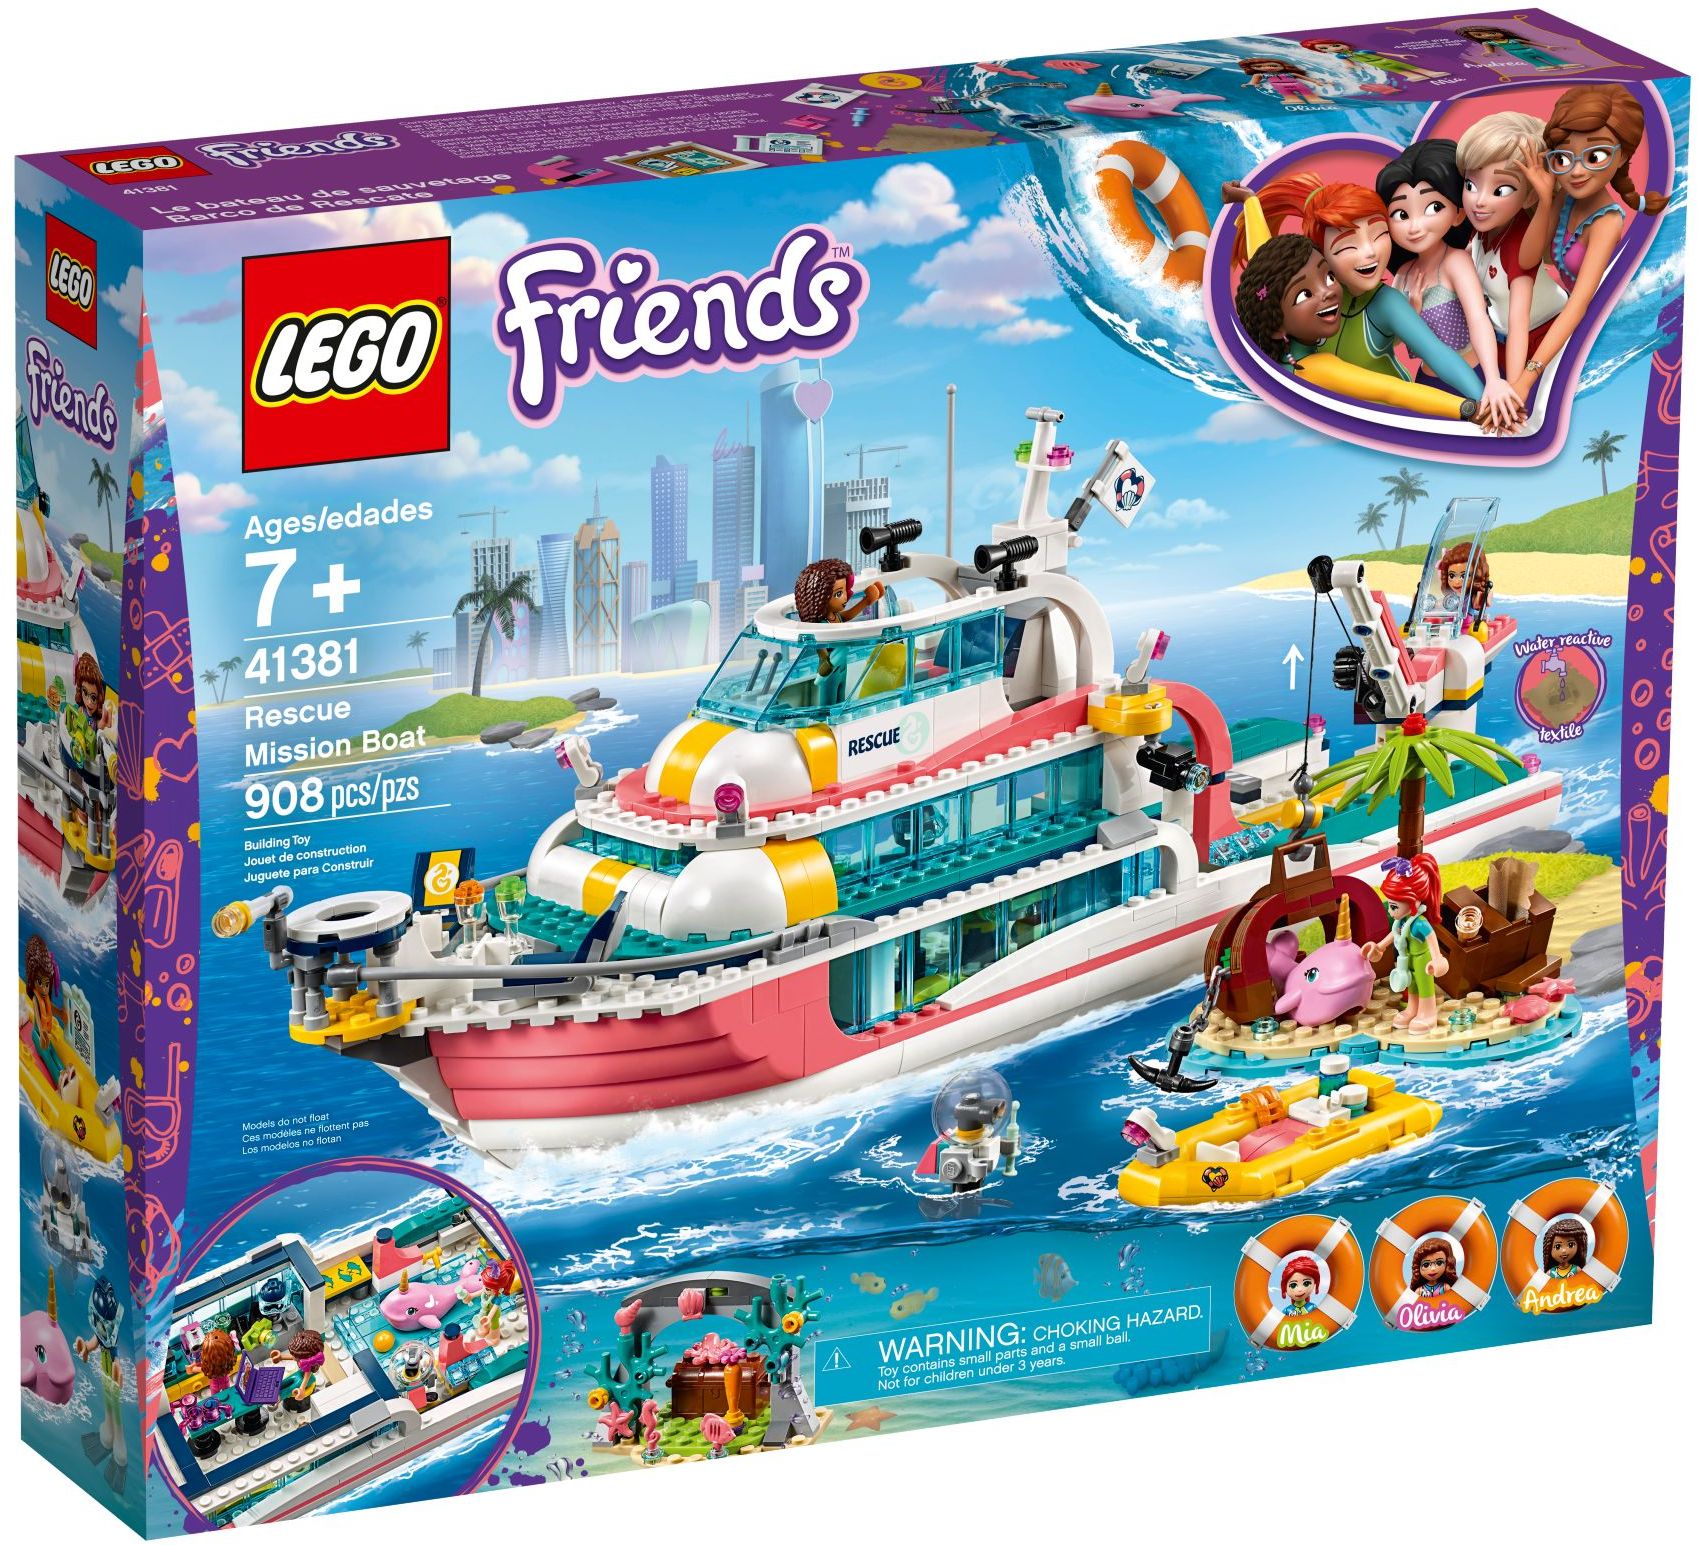 Rescue Mission Boat | LEGO Friends Wiki | Fandom